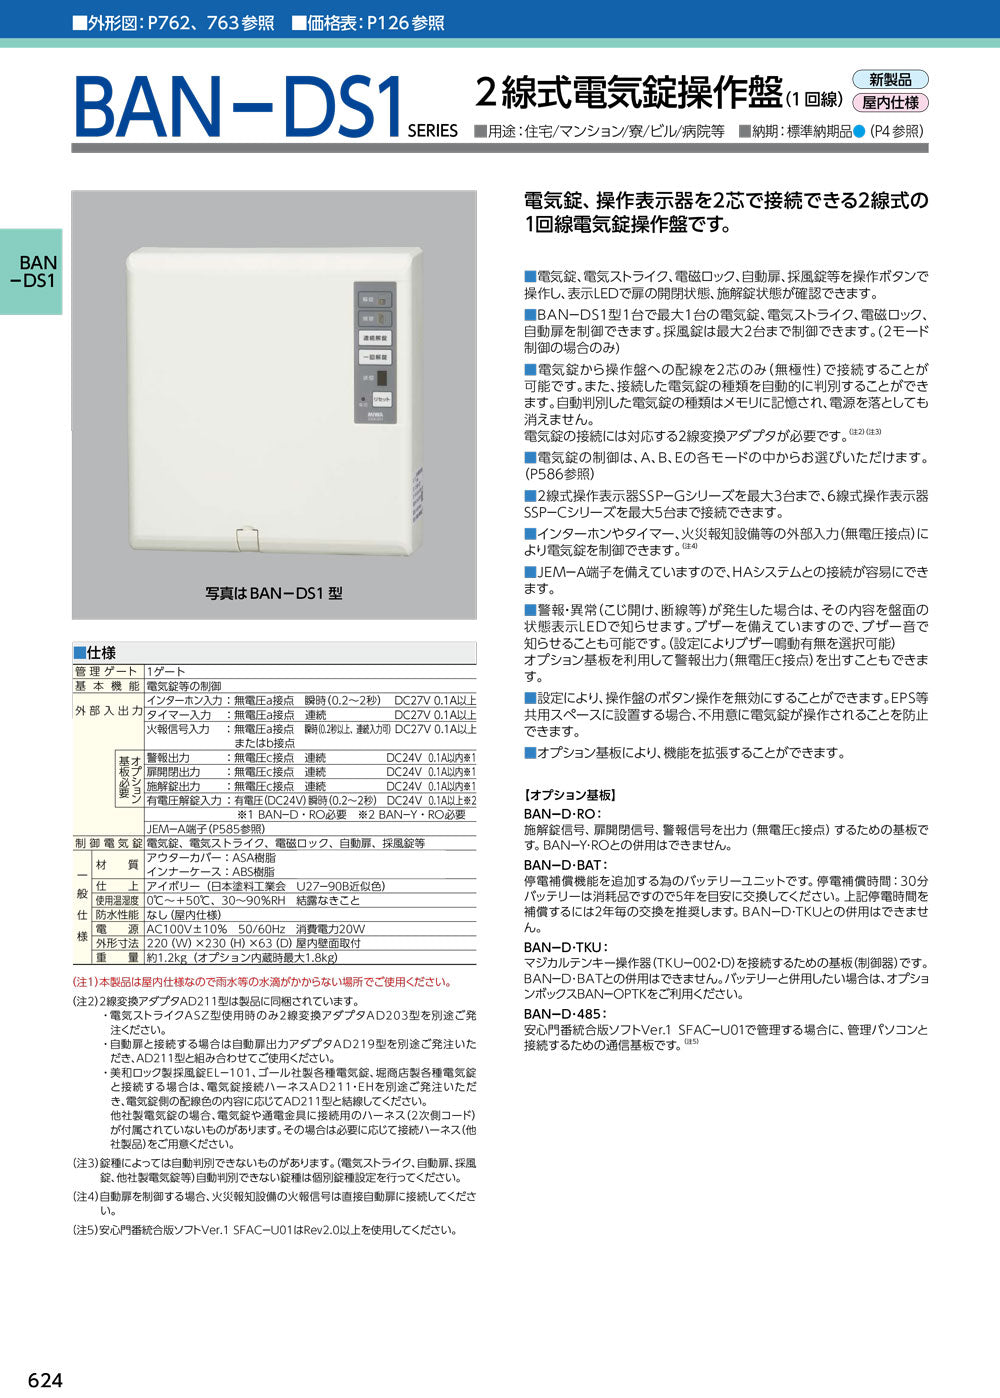 MIWA 2線式電気錠操作盤BAN-DS1（BAN-BS1後継機種） – エーエルロック